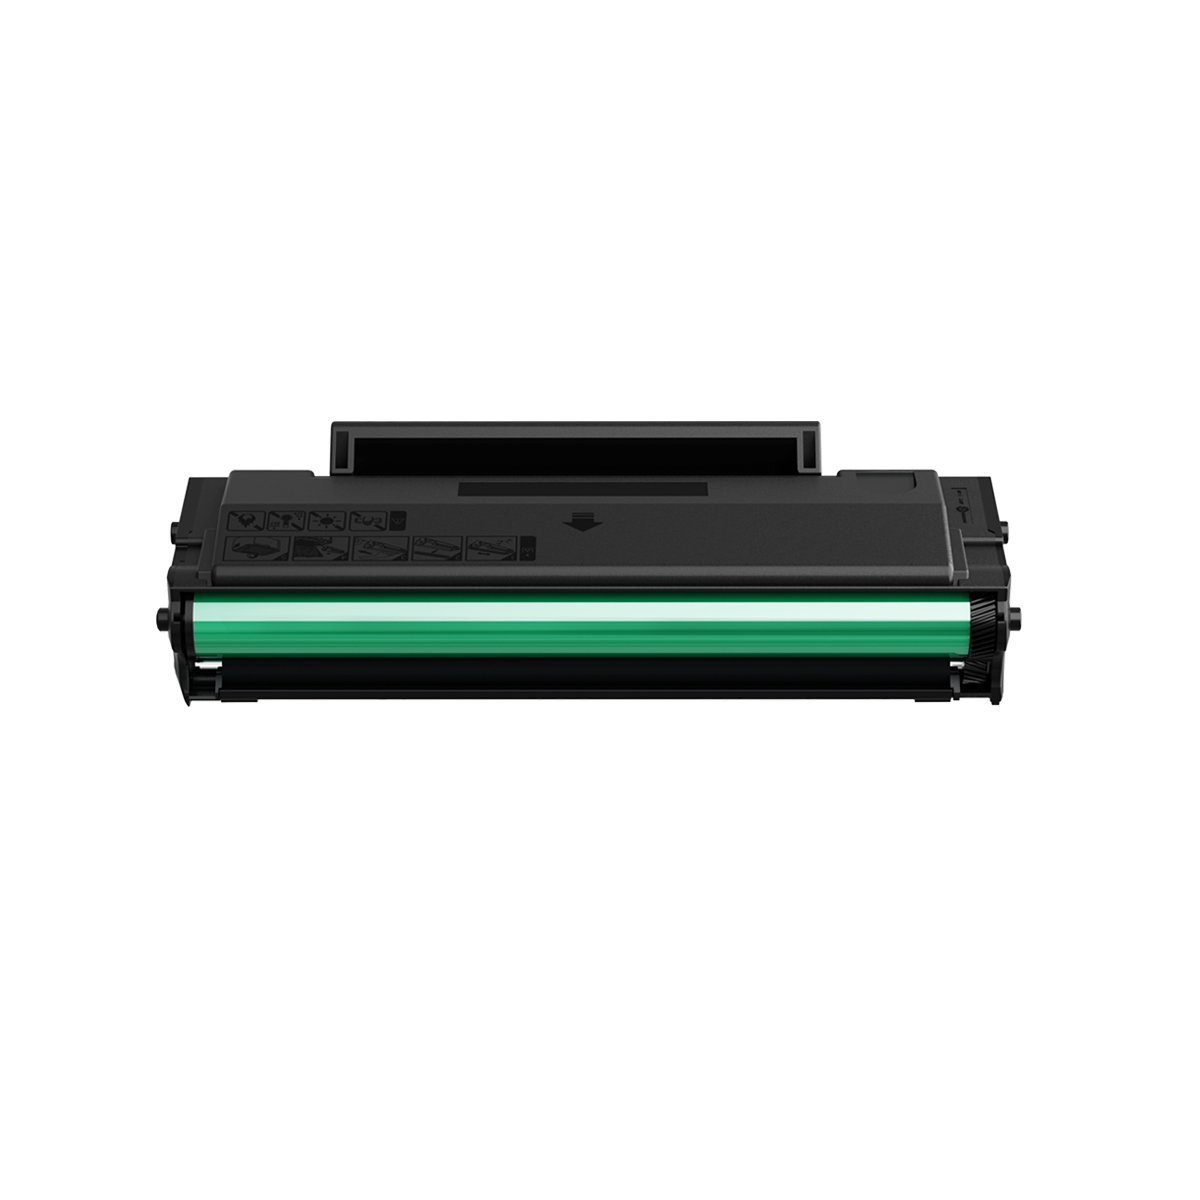 MEPL  PC220 Black Ink Cartridge